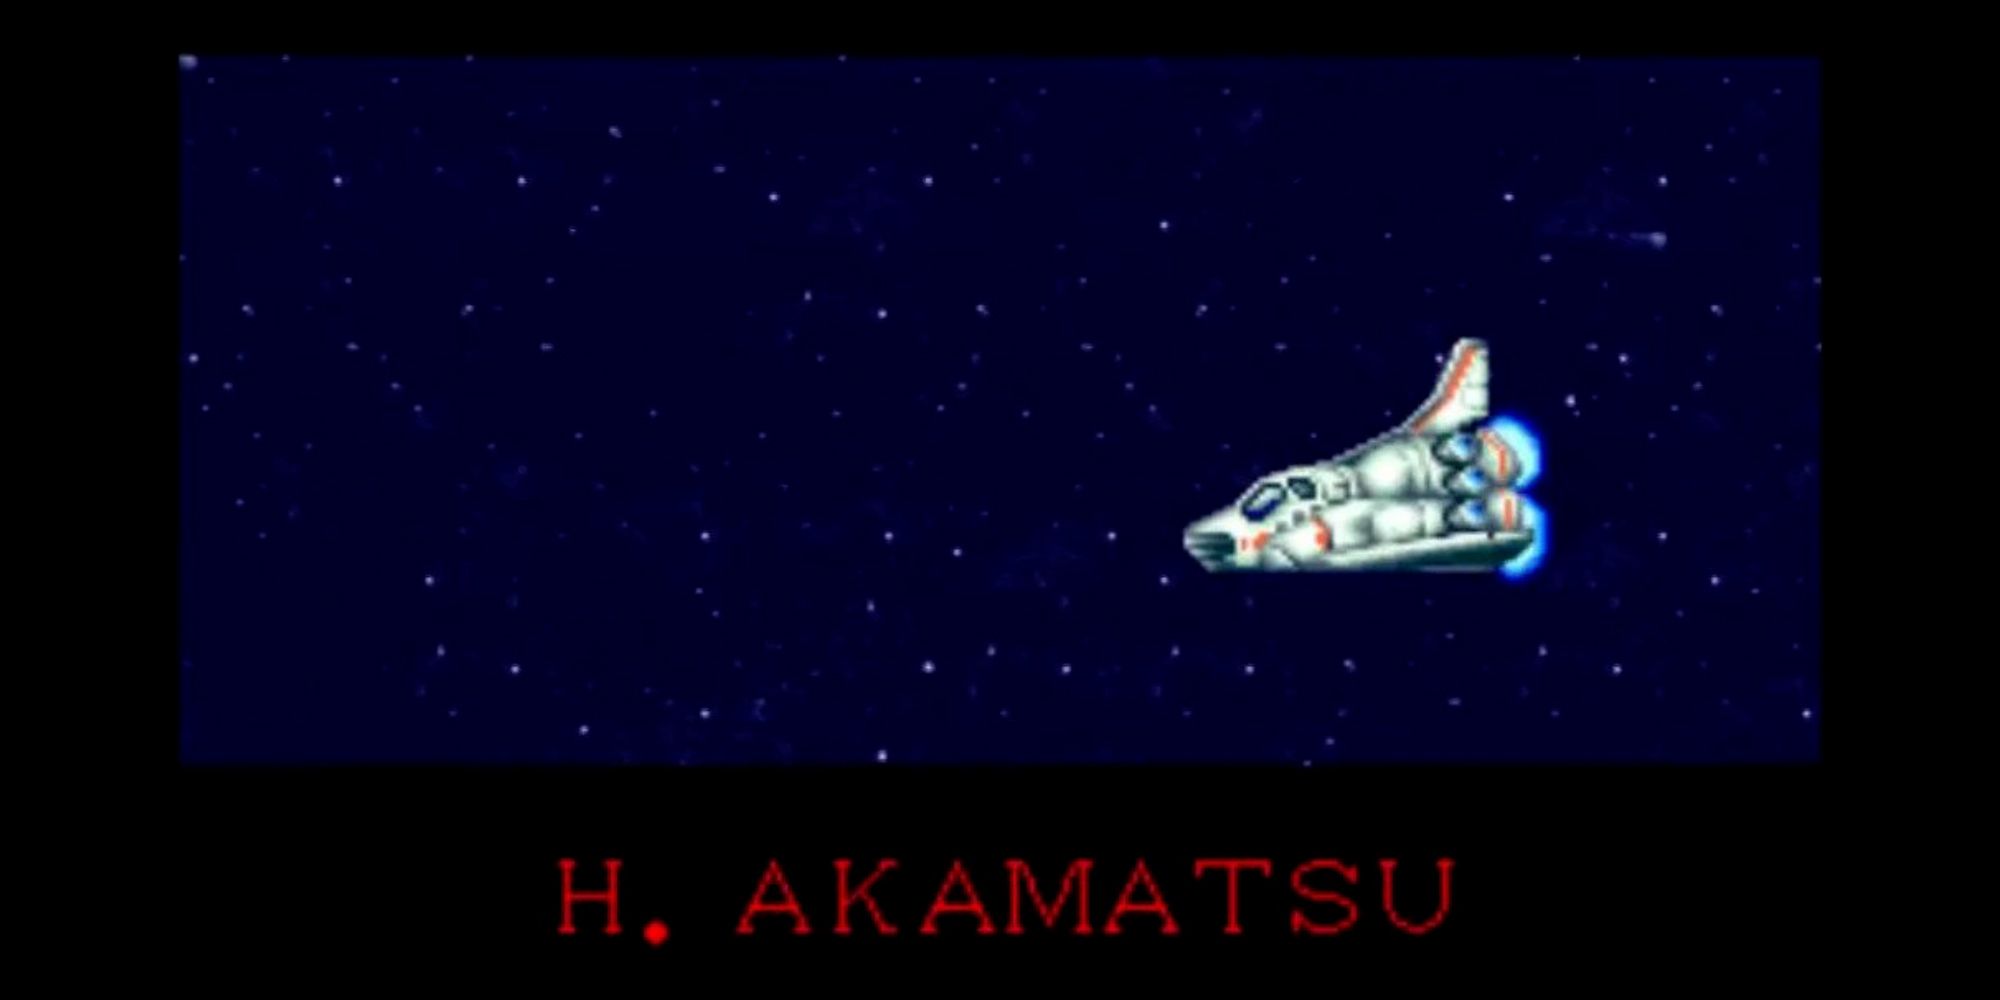 Still Taken From One Of Hitoshi Akamatsu's games, Suprise Attack